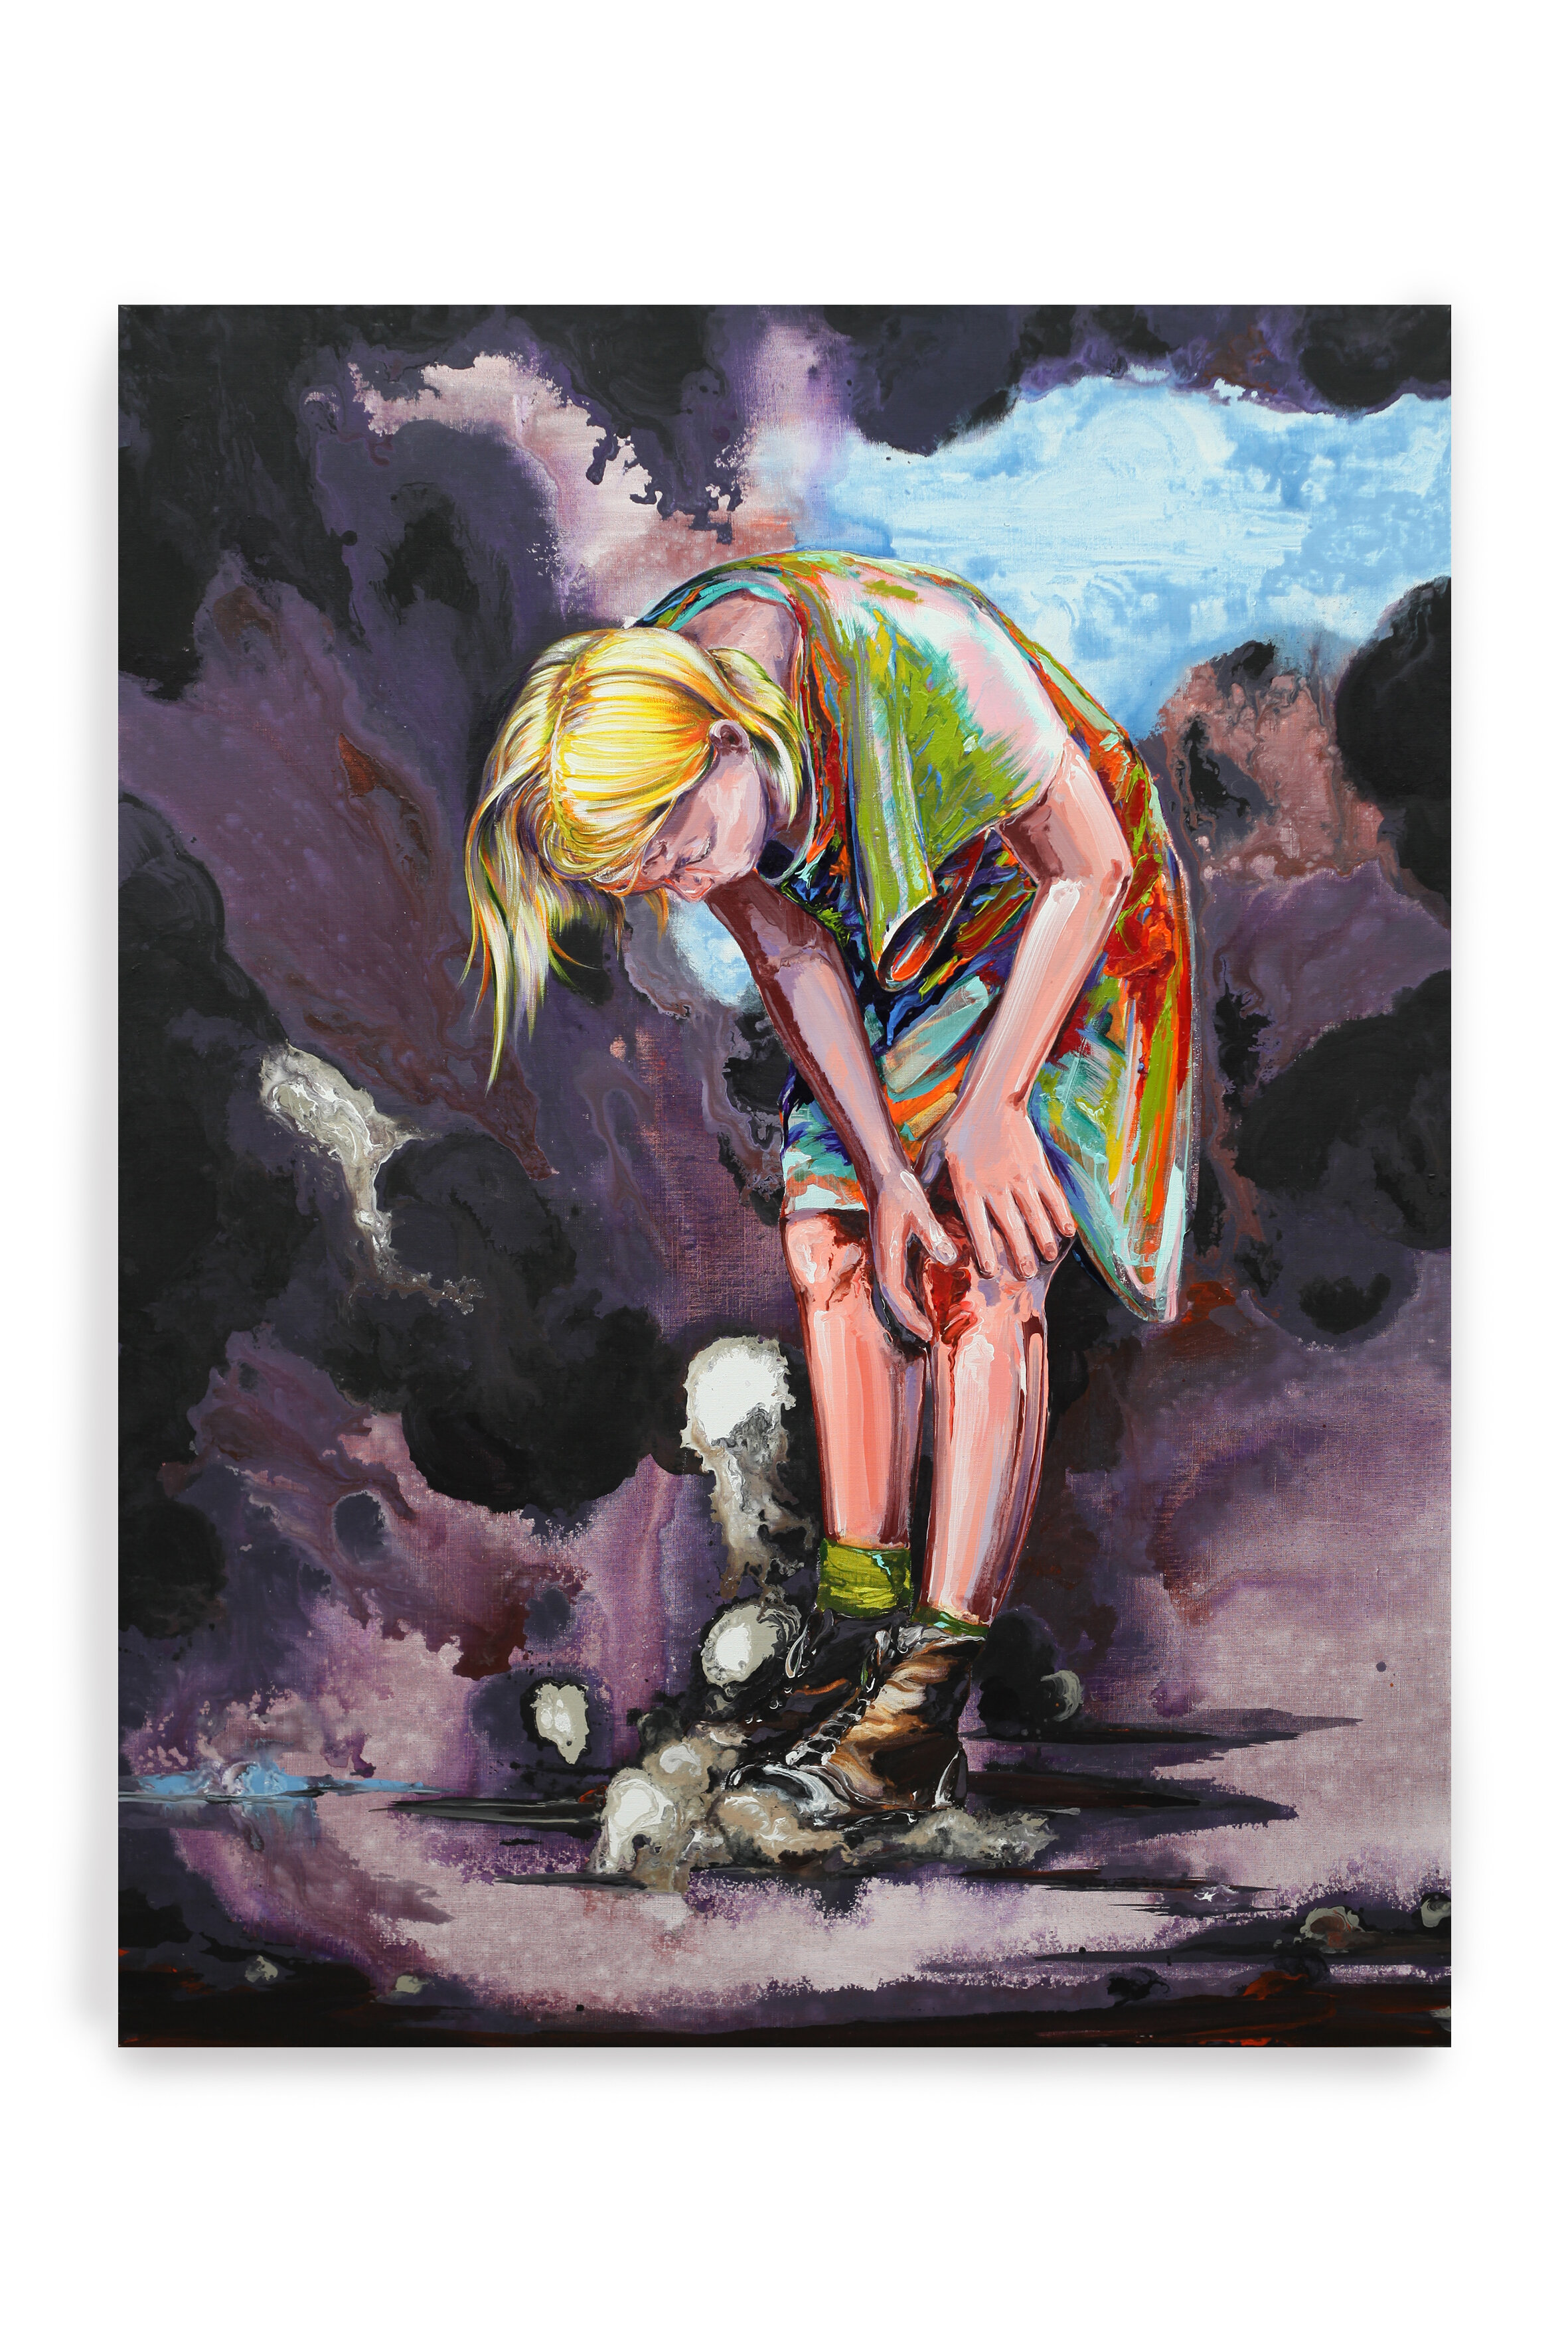 Ge-Karel van der Sterren, Painstalking, Lara, 2016, acrylic and oil on canvas